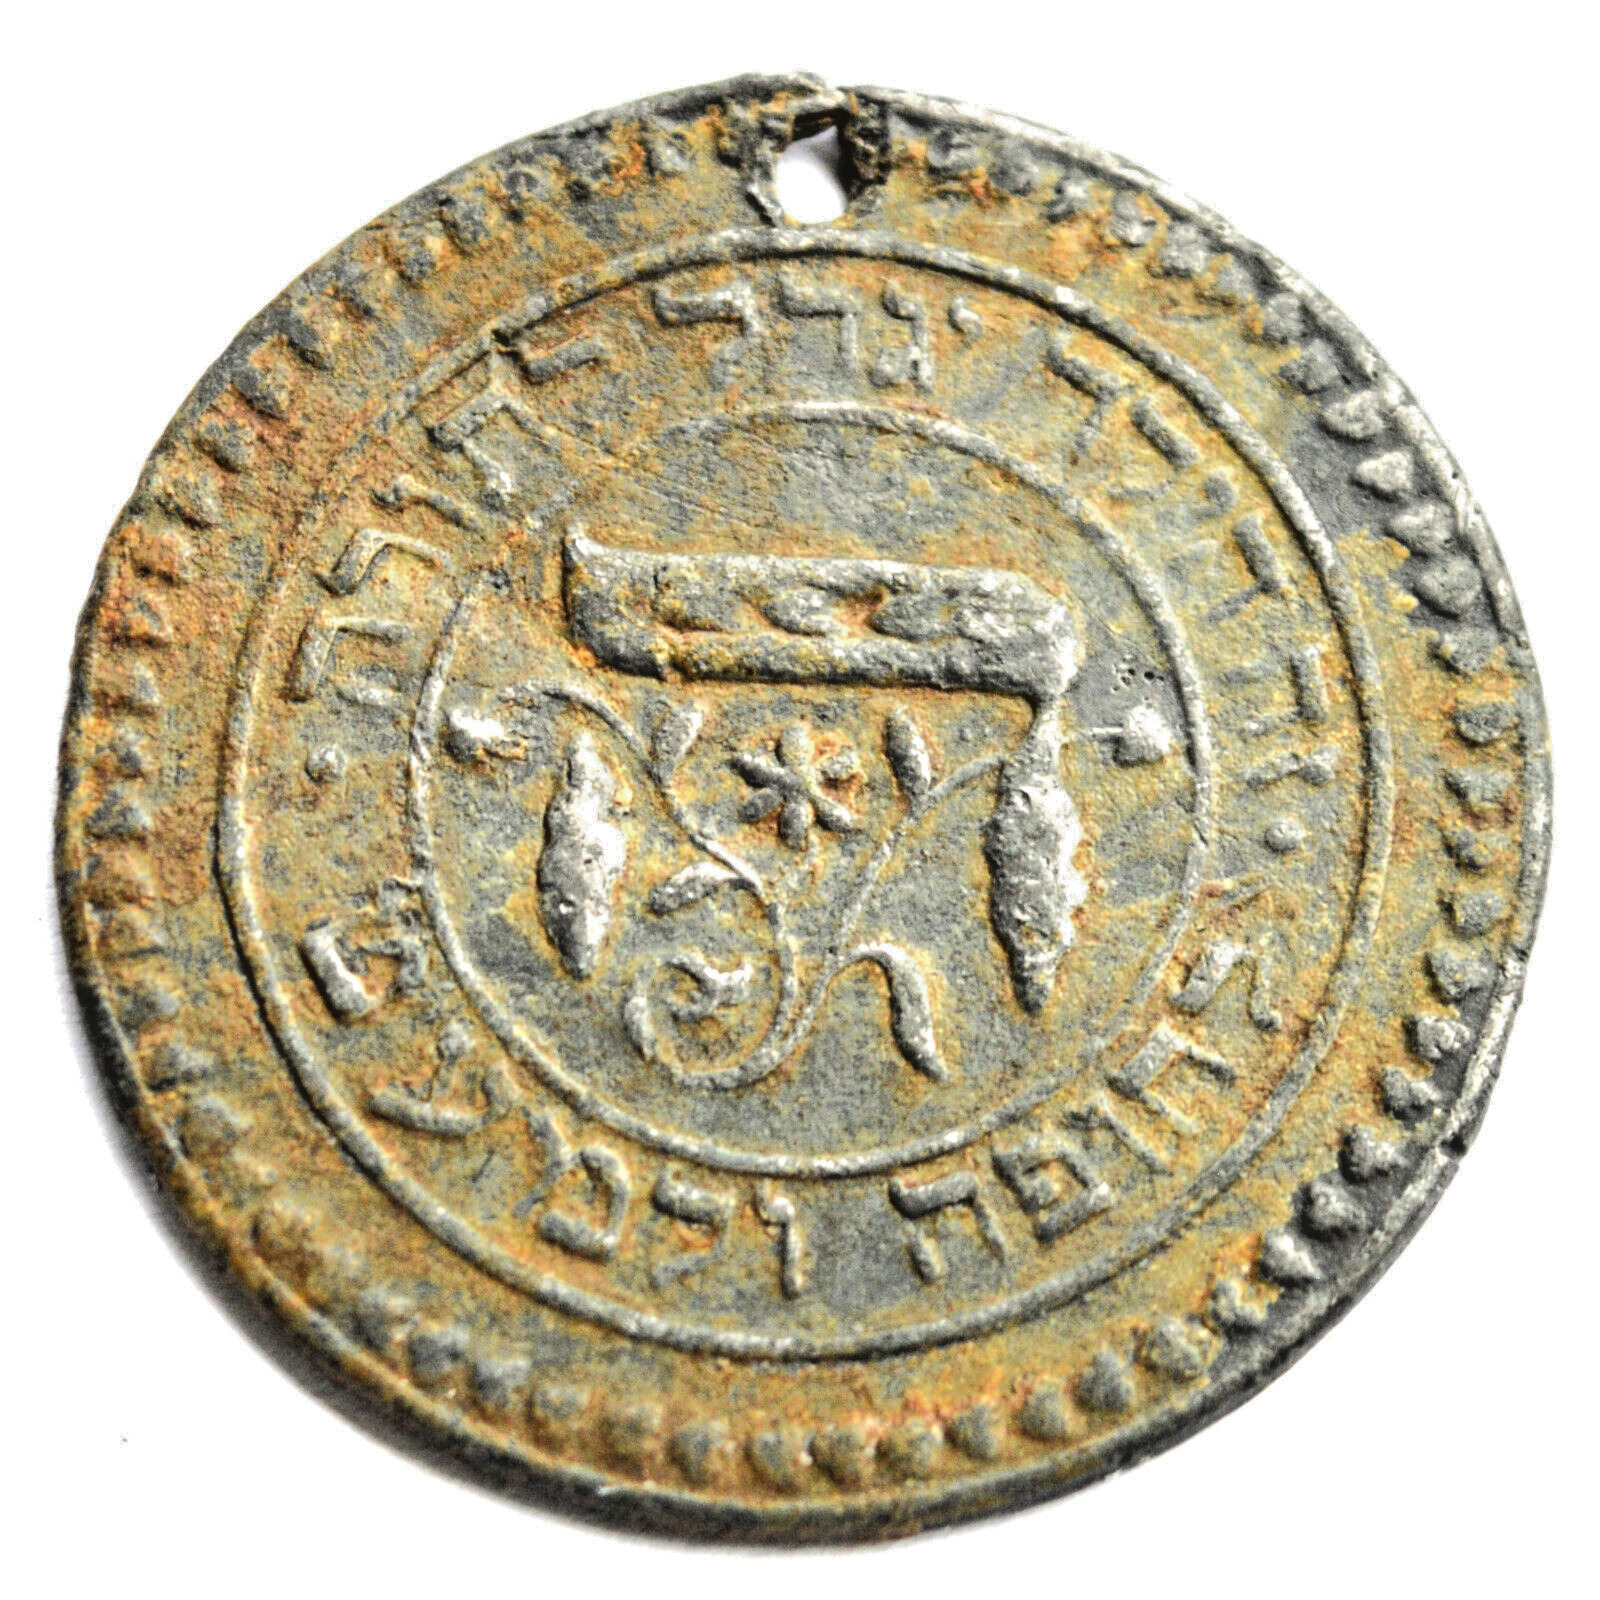 Antique judaica amulet for safeguarding a child European kamea kabbalah 18-19th